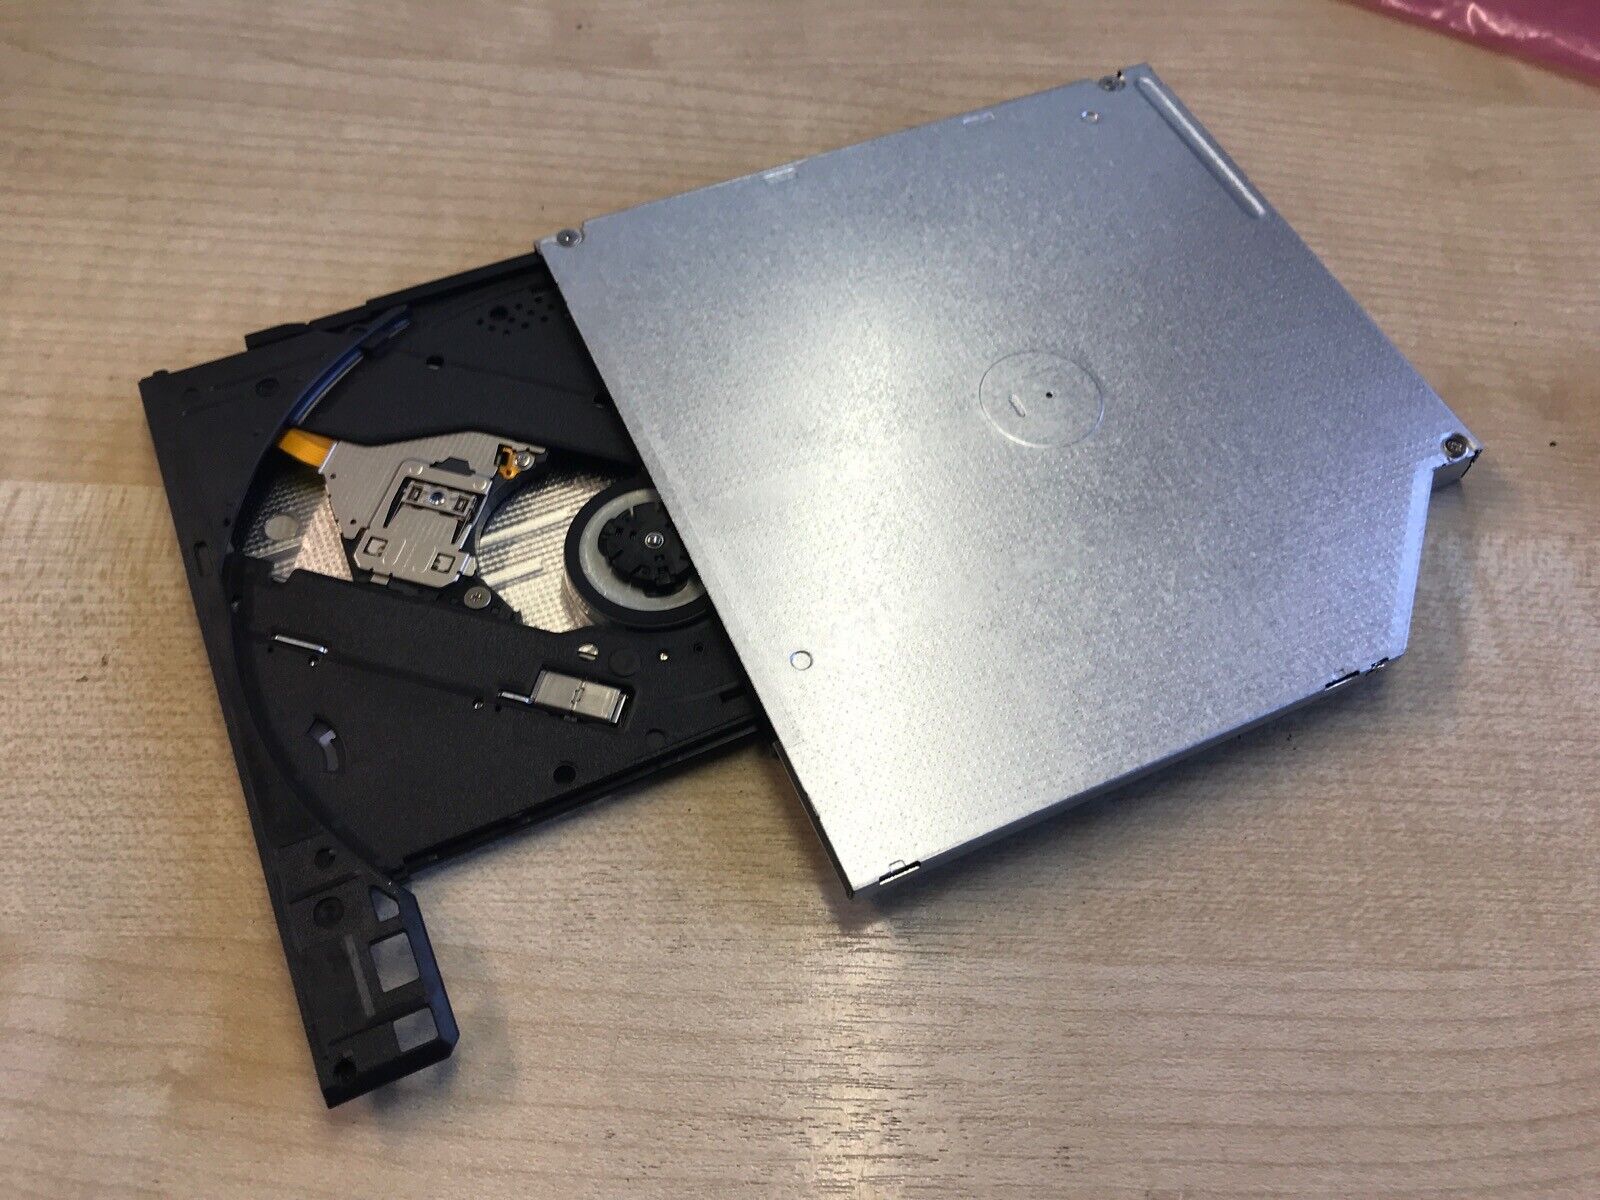 Postman Disapproved repent Lenovo Thinkpad P70/ P71 DVD Optical Writer Drive 00FC442 GUD0N #D3 | eBay